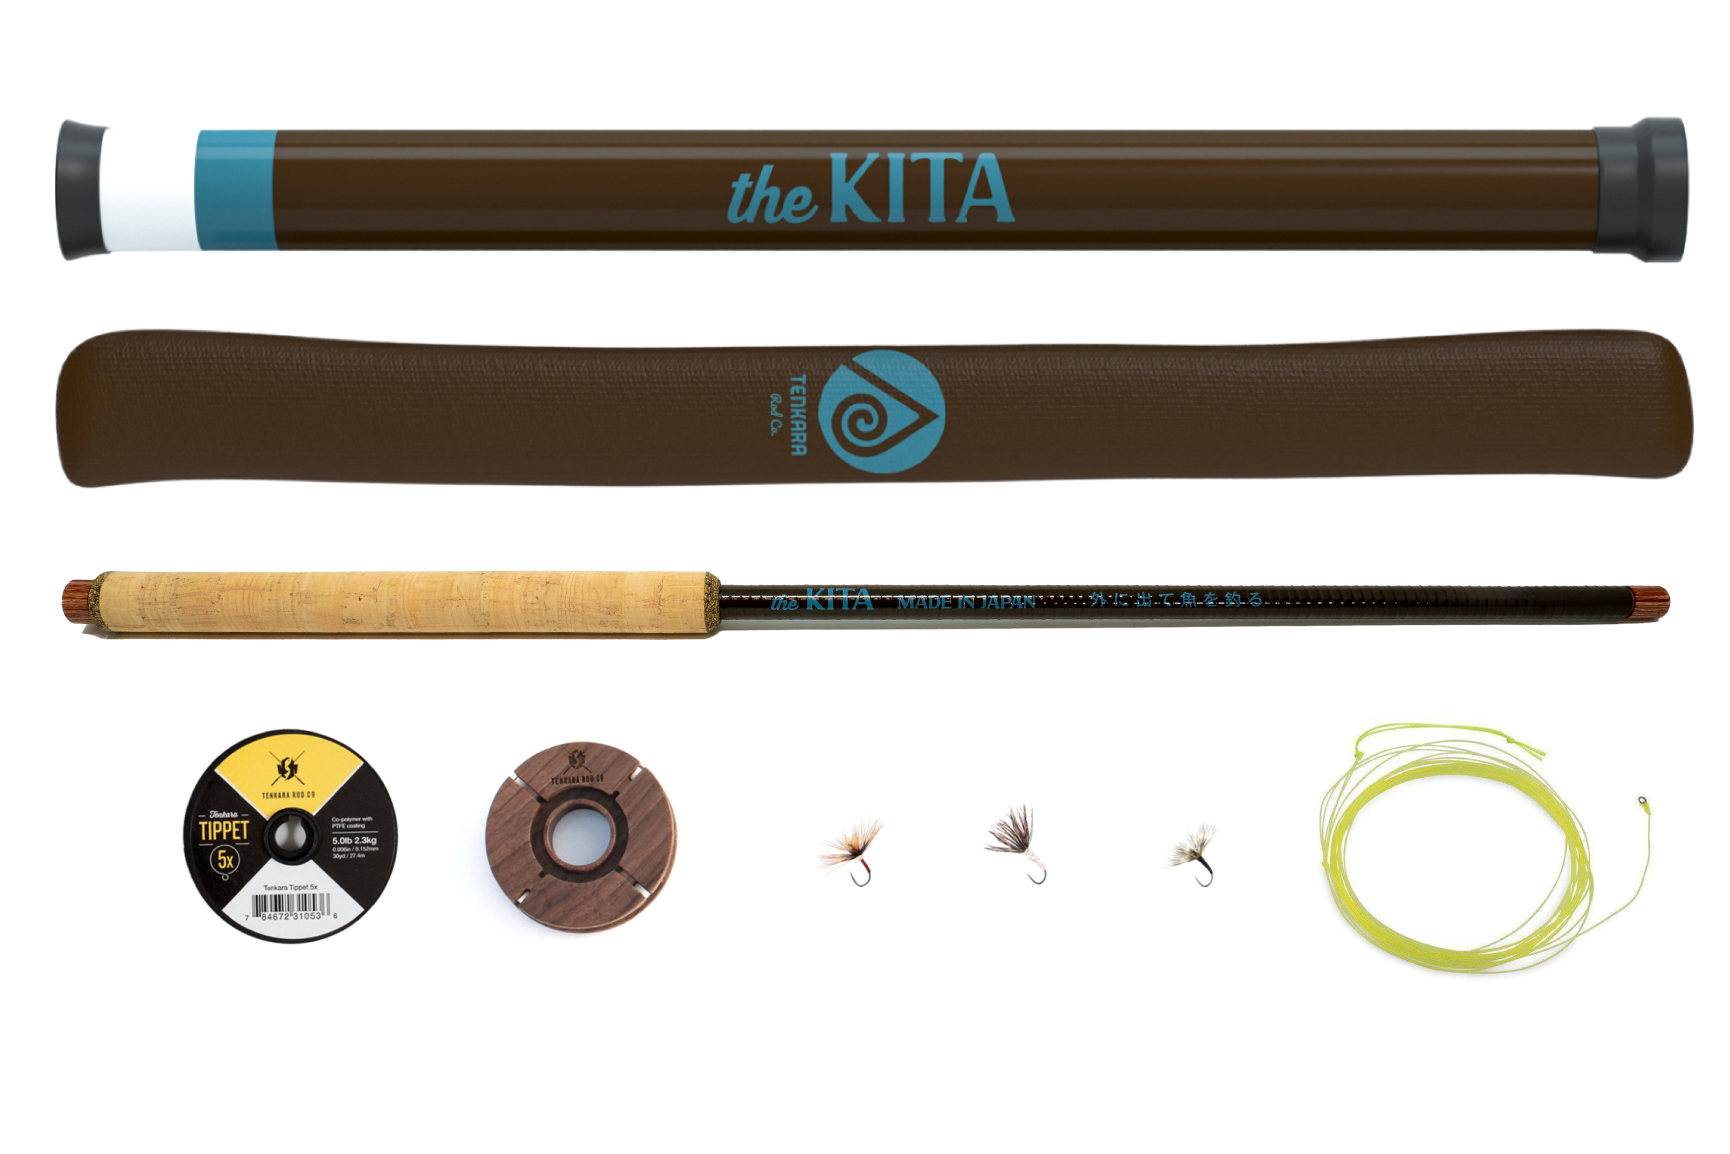 REYR Gear - Tiny Cast Tenkara Rod, Ultralight Fishing Rod with